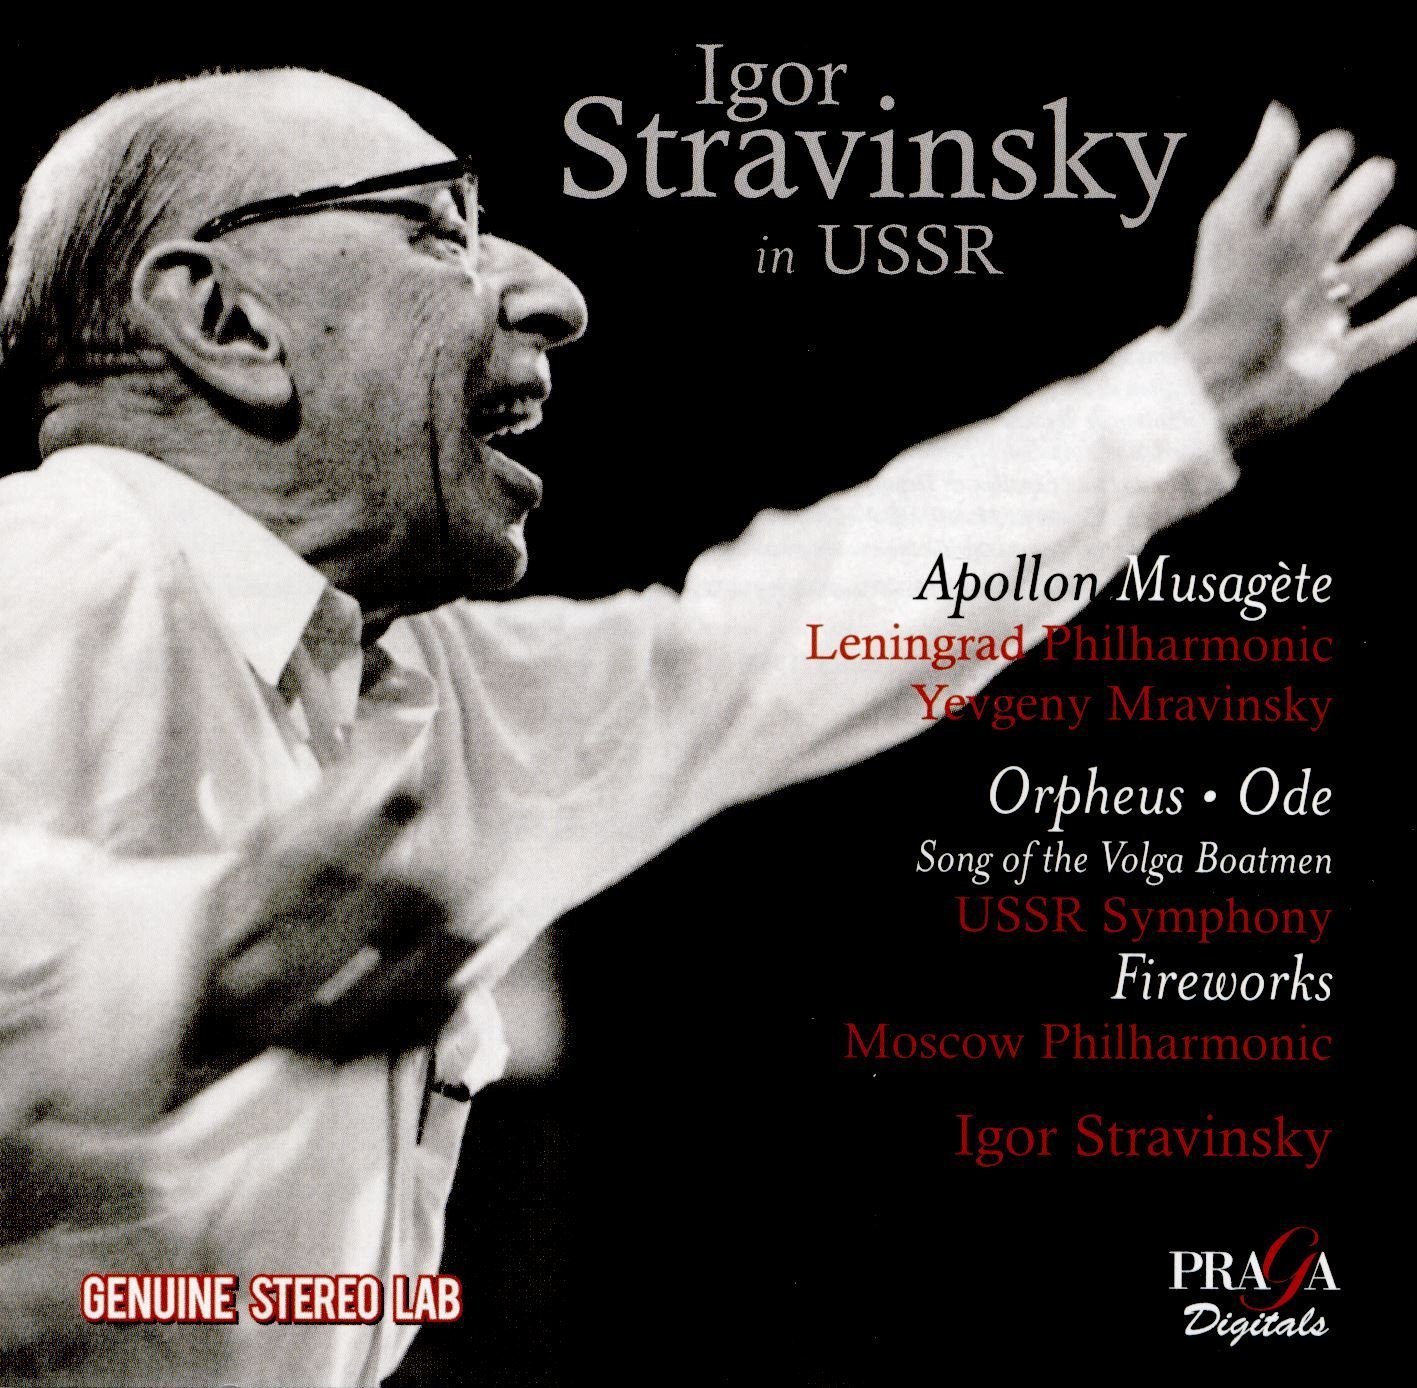 Igor Stravinsky in USSR - Apollon Musagete, Orpheus, Ode, Fireworks, Song of the Volga Boatmen | Leningrad Philharmonic Orchestra, Igor Stravinsky, Yevgeny Mravinsky